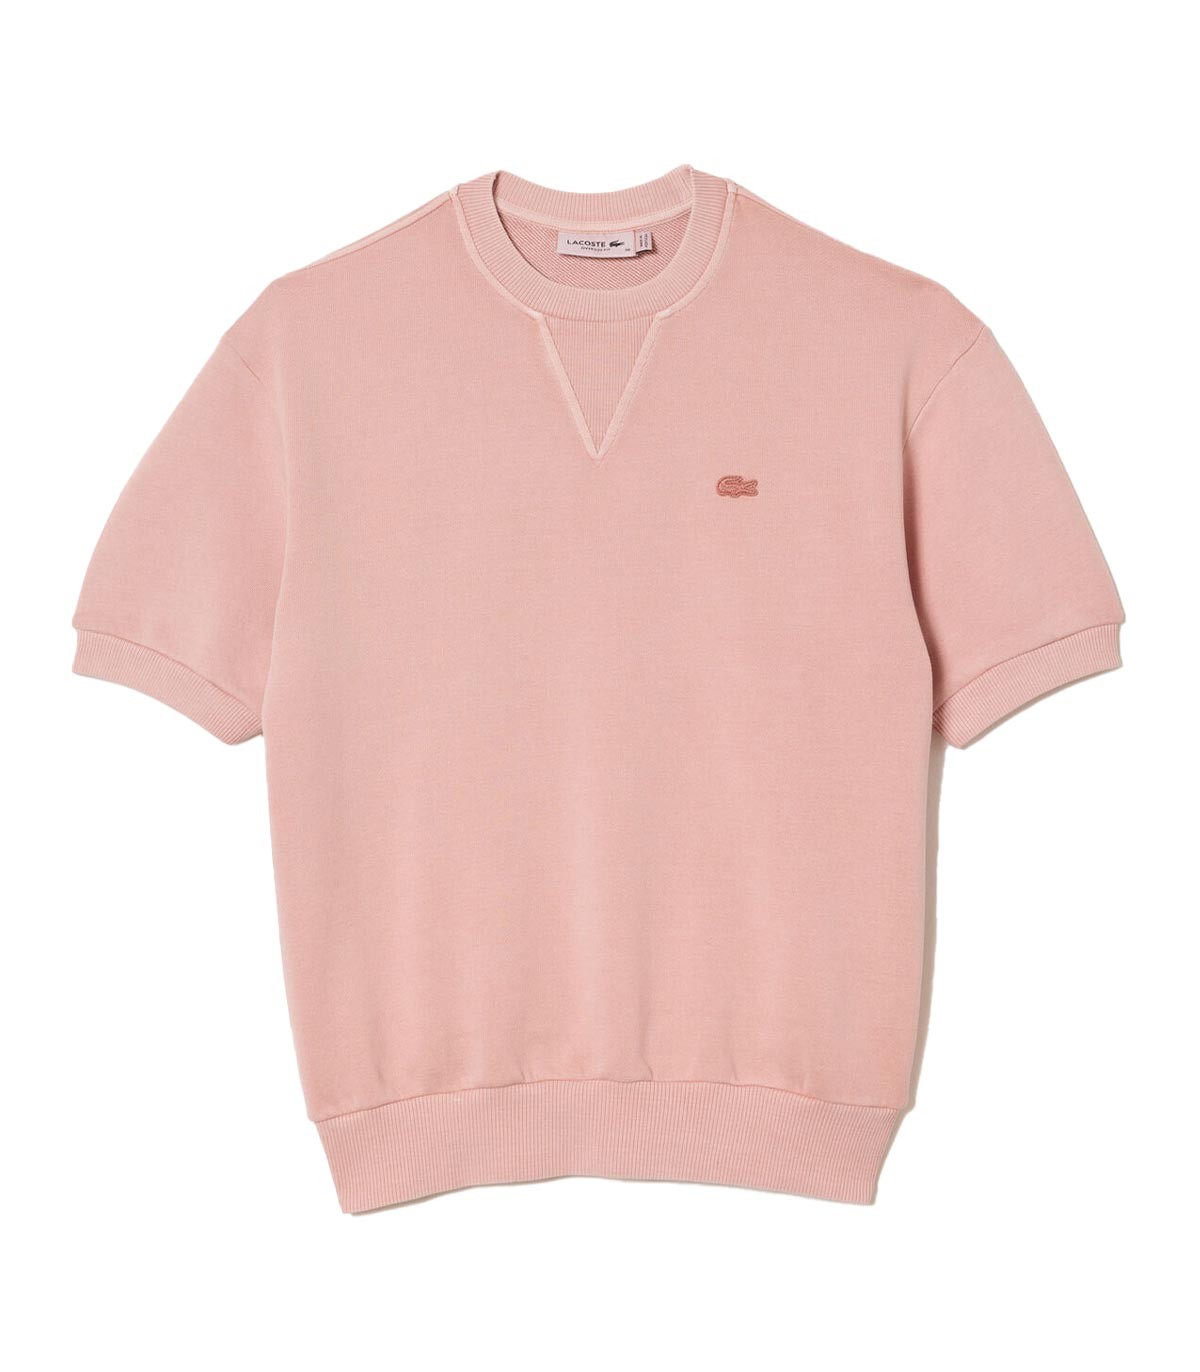 Lacoste - Camiseta Natural Dyed - Rosa